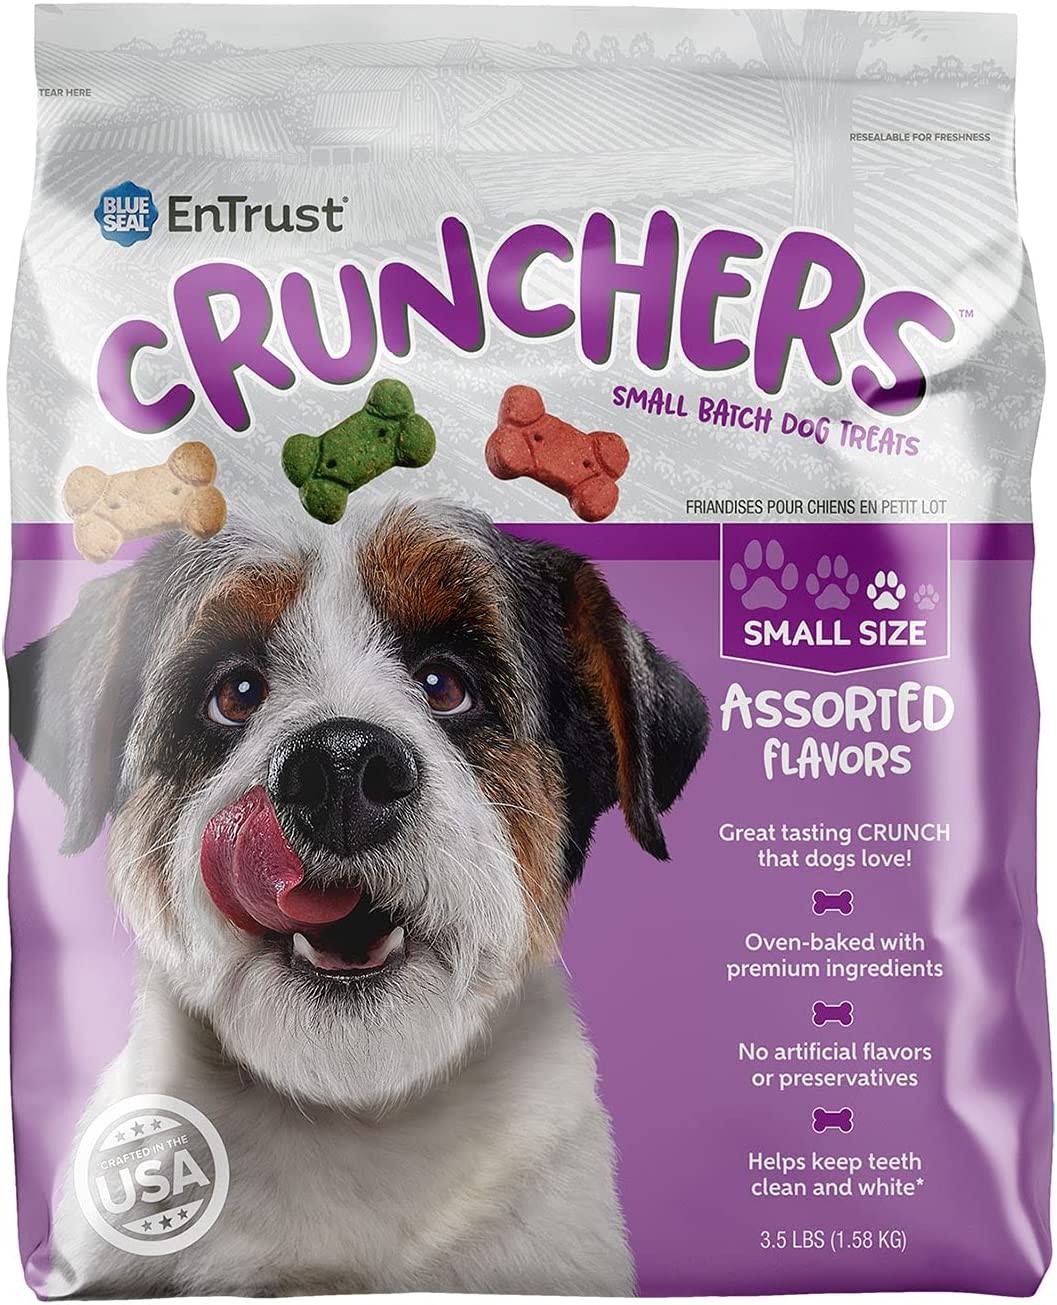 Blue Seal Entrust Crunchers Assorted Crunchy Dog Treats, Small, 3.5-lb Bag